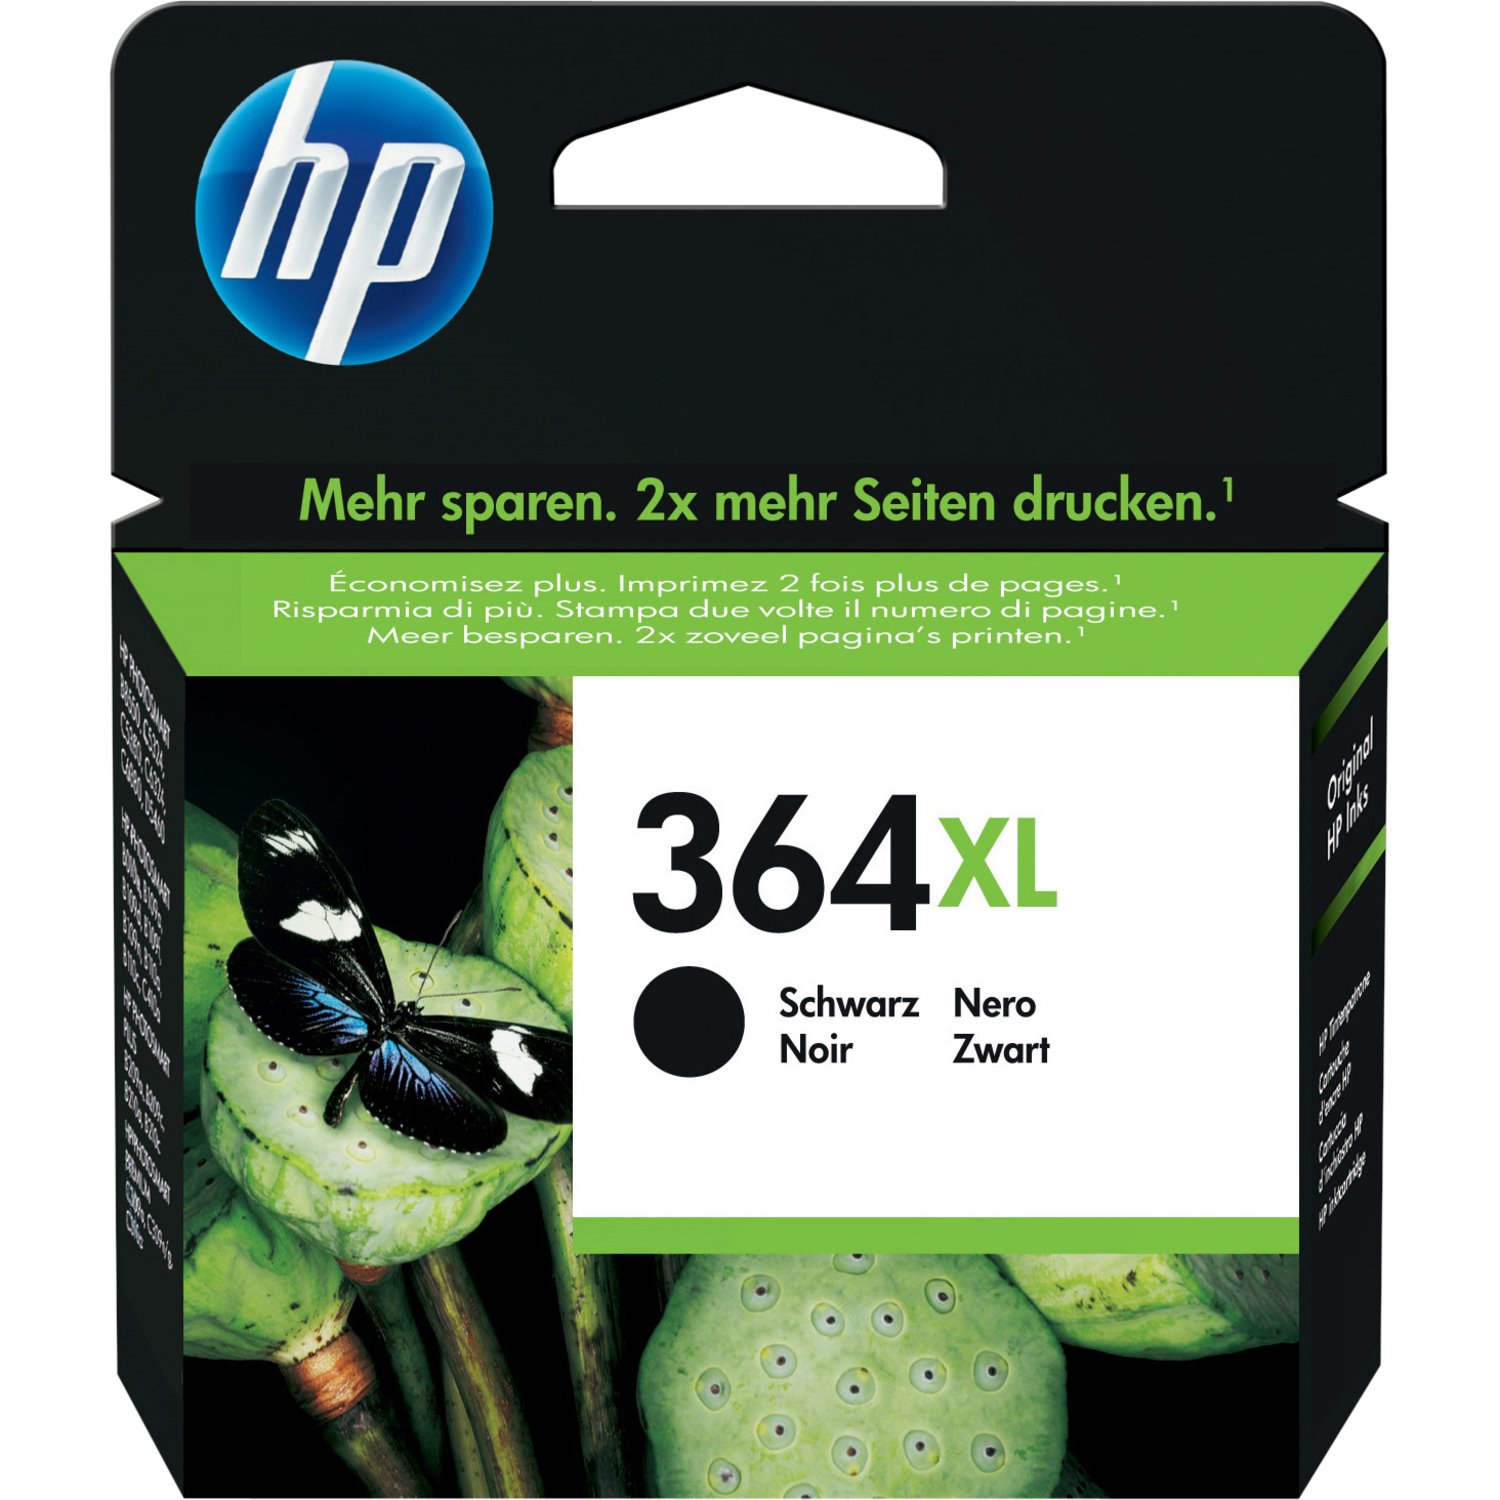 HP 364XL Original Inkjet Ink Cartridge - Black Pack